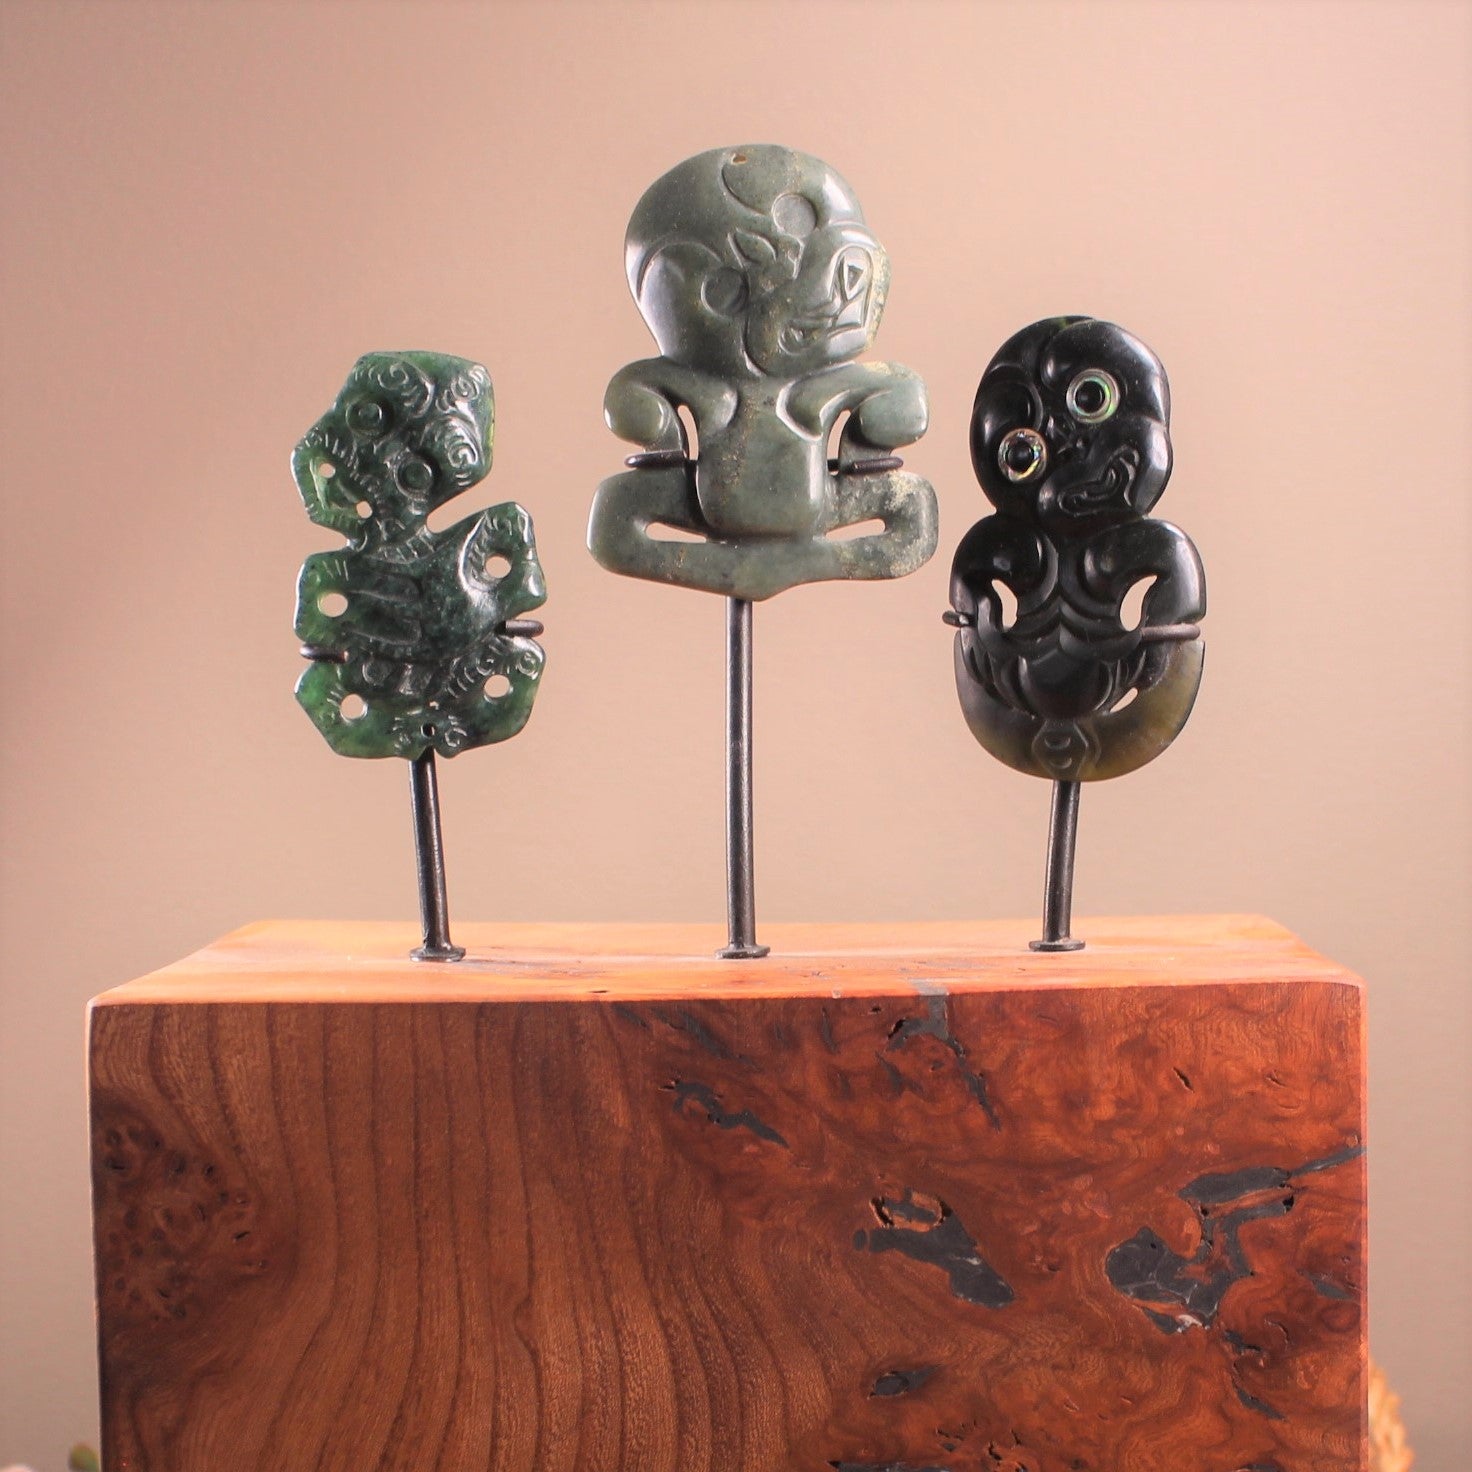 Hei Tiki Sculpture from Hapopo and Kawakawa Pounamu set into a Wooden base - NZ Greenstone